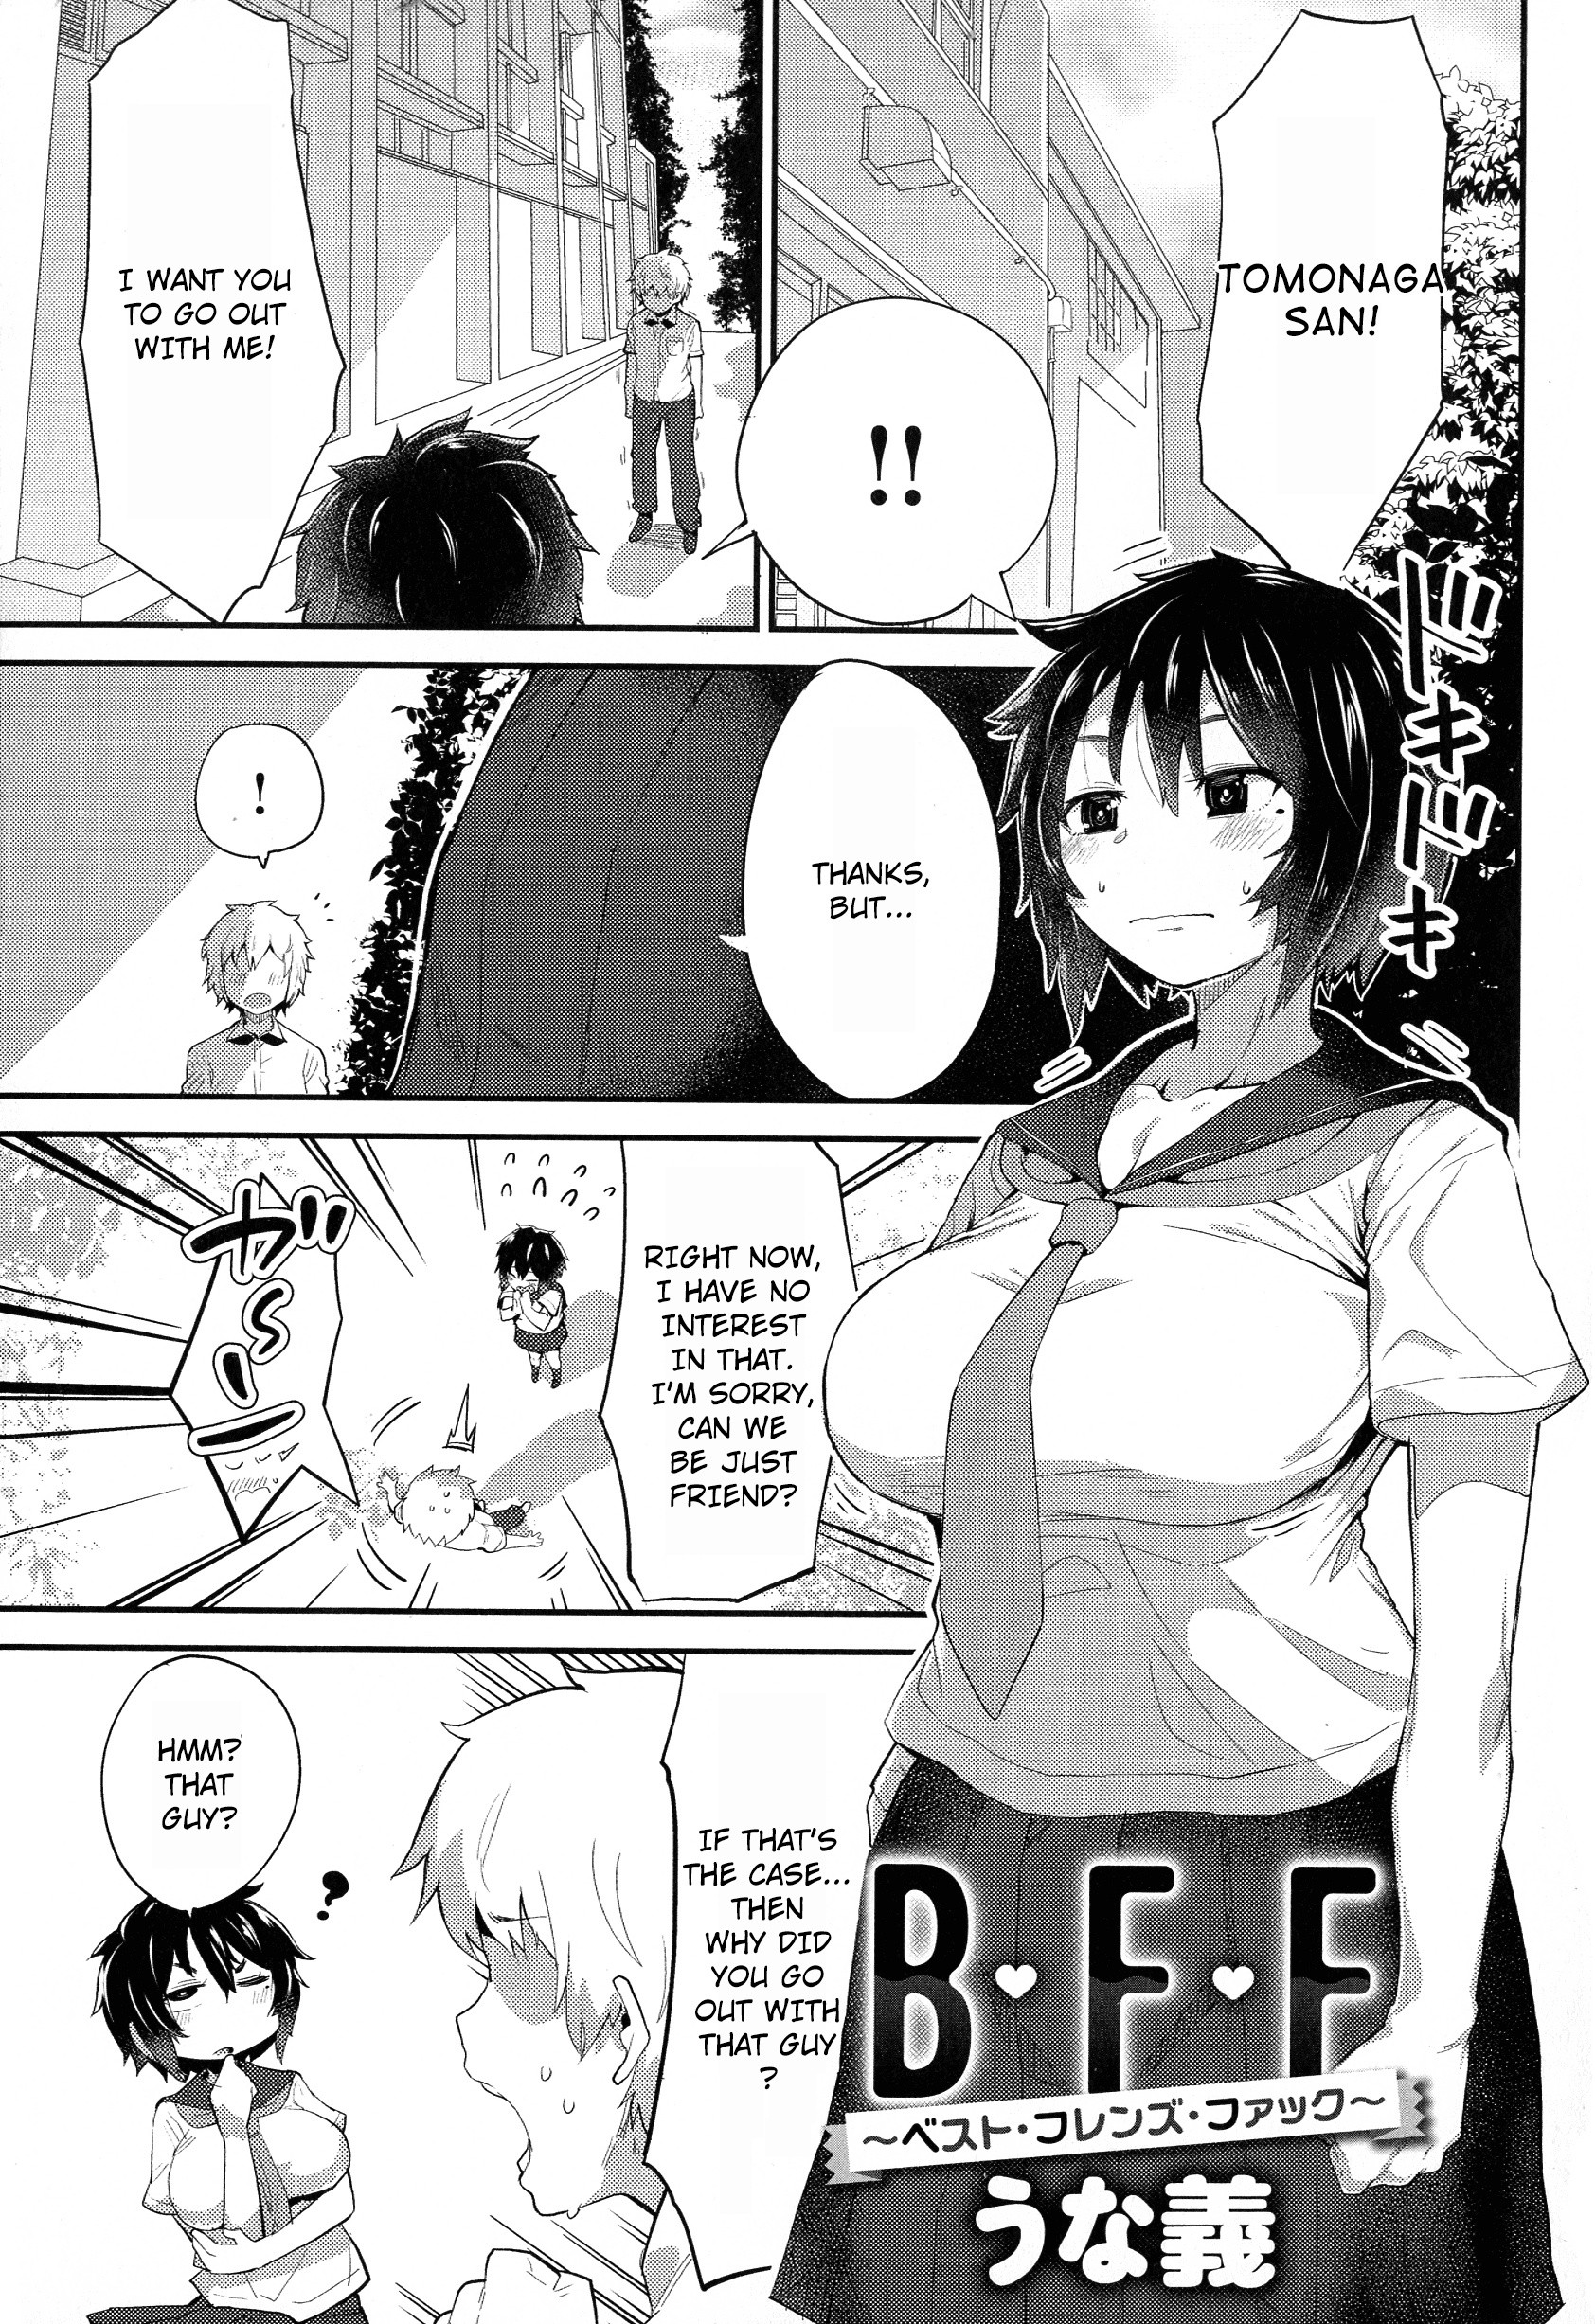 B.F.F. - Best Friends Fuck hentai manga picture 2